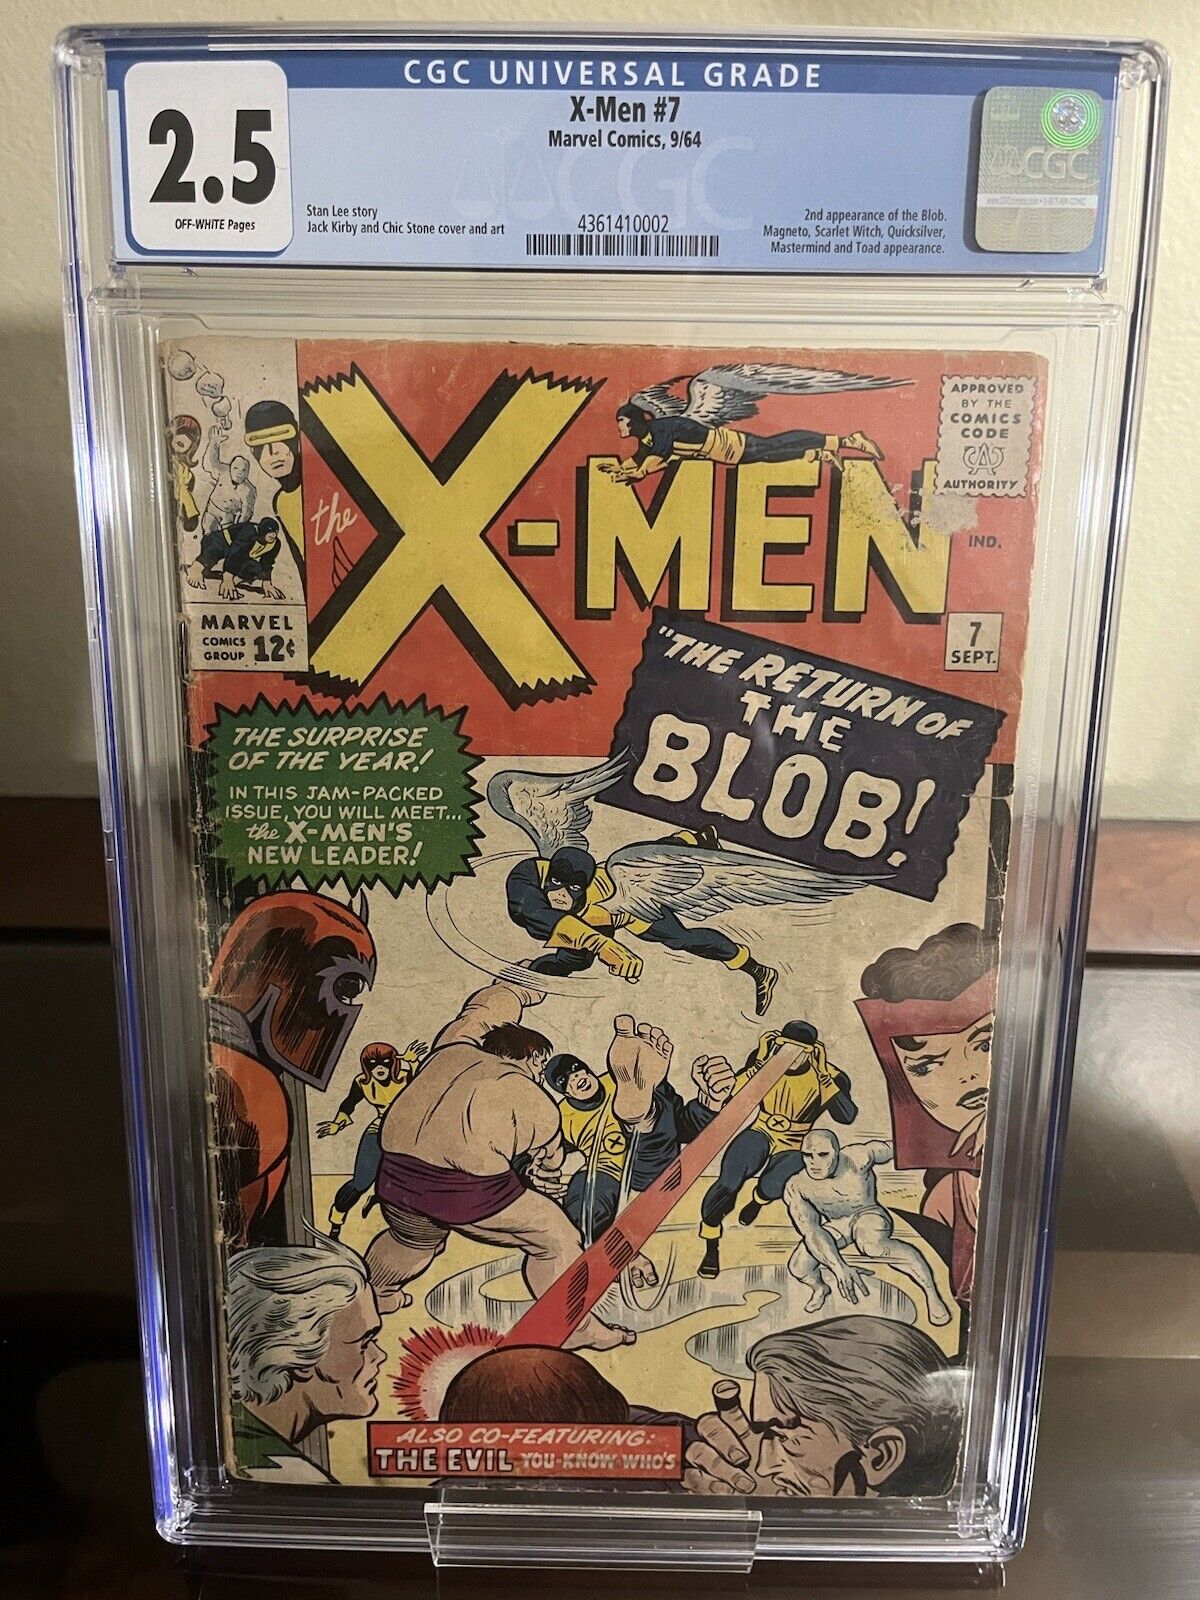 X-Men #7 - Marvel Comics 1964 CGC 2.5 2nd appearance of the Blob.